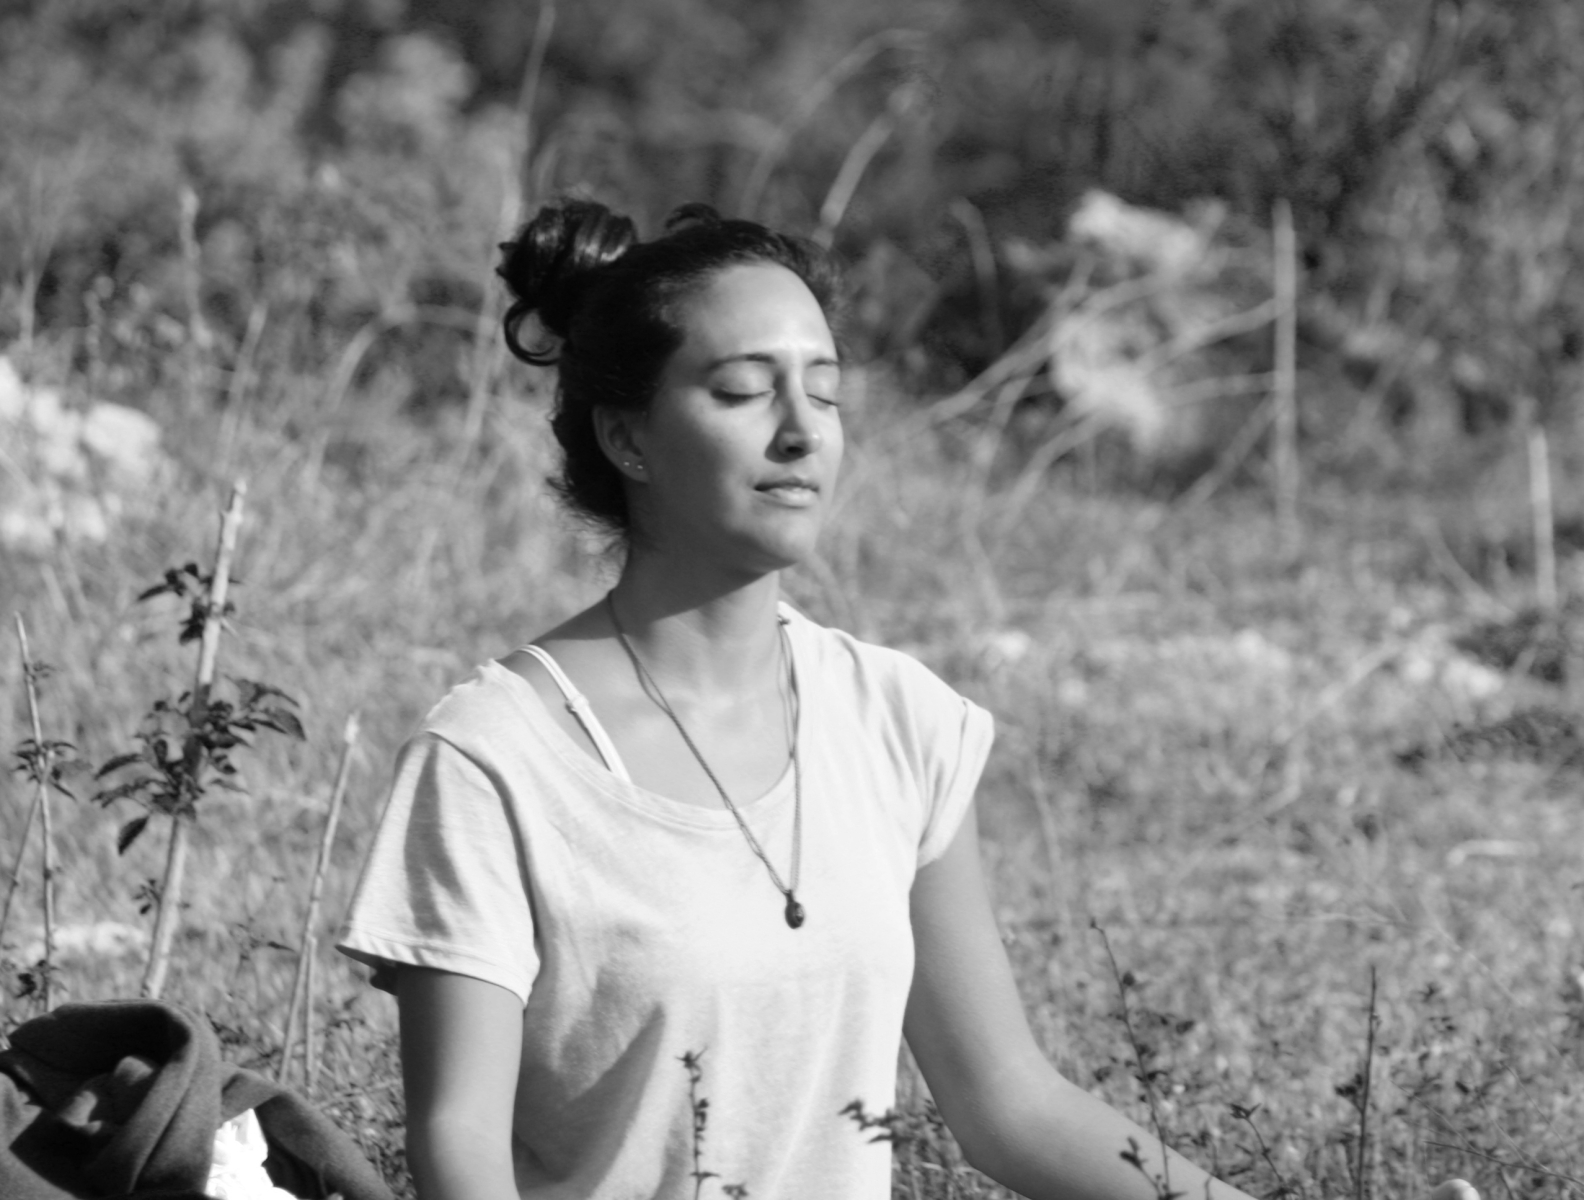 Yoga Retreat India by Akash Rawat on Dribbble